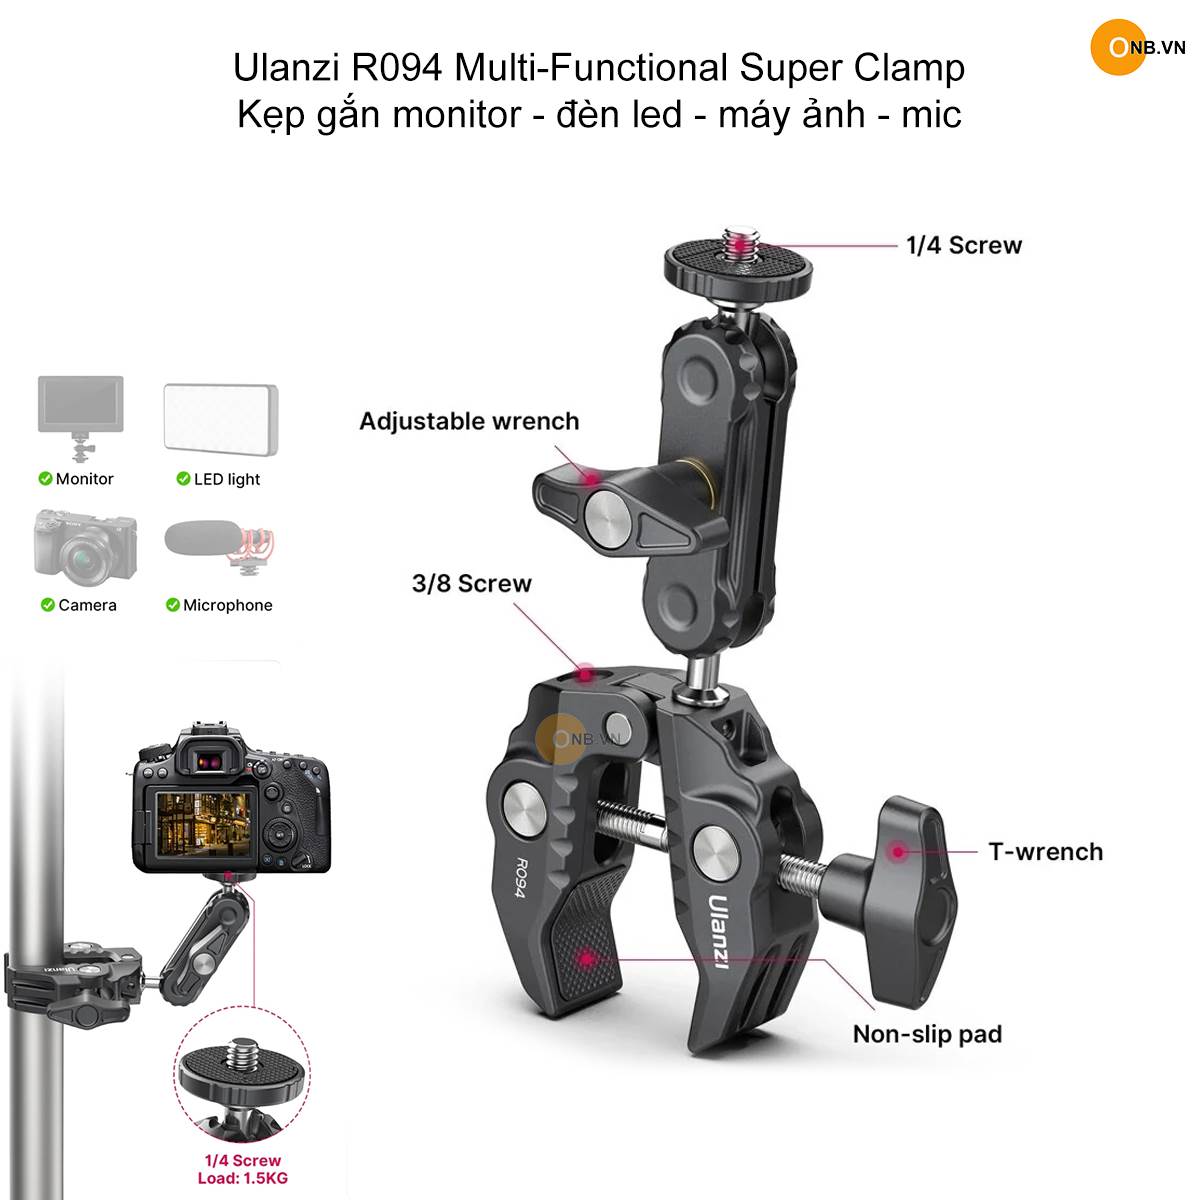 Ulanzi R094 Multi-Functional Super Clamp - Kẹp kim loại Monitor, Đèn Led